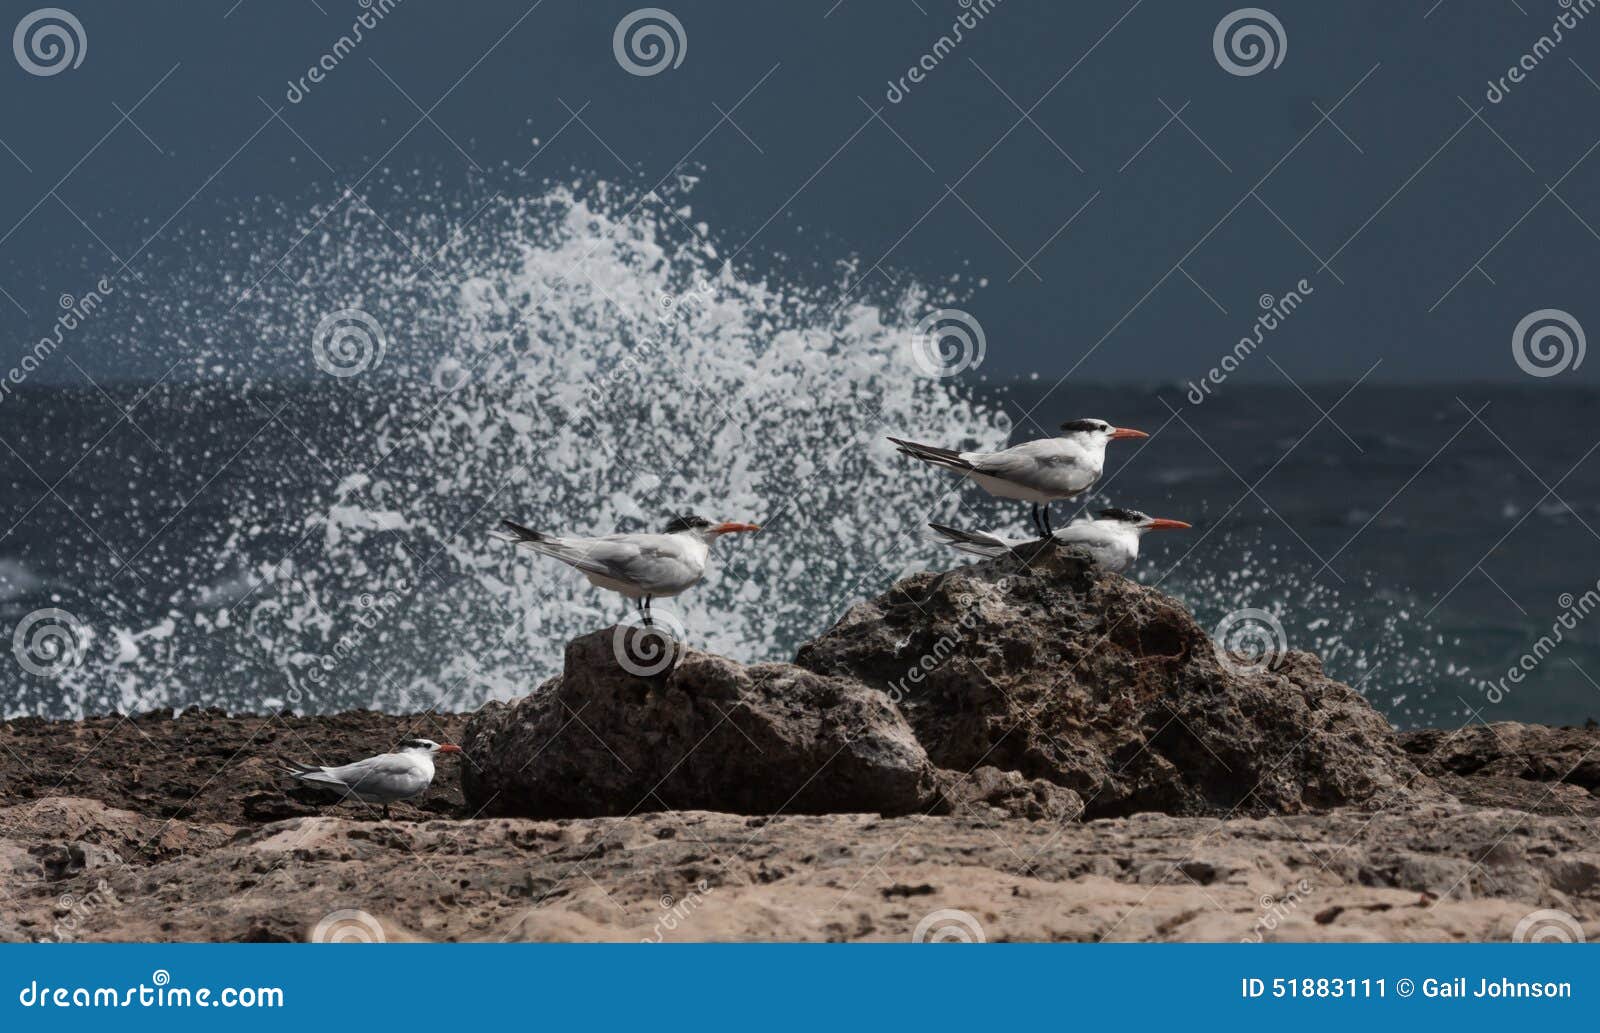 playa canoa waves and birds